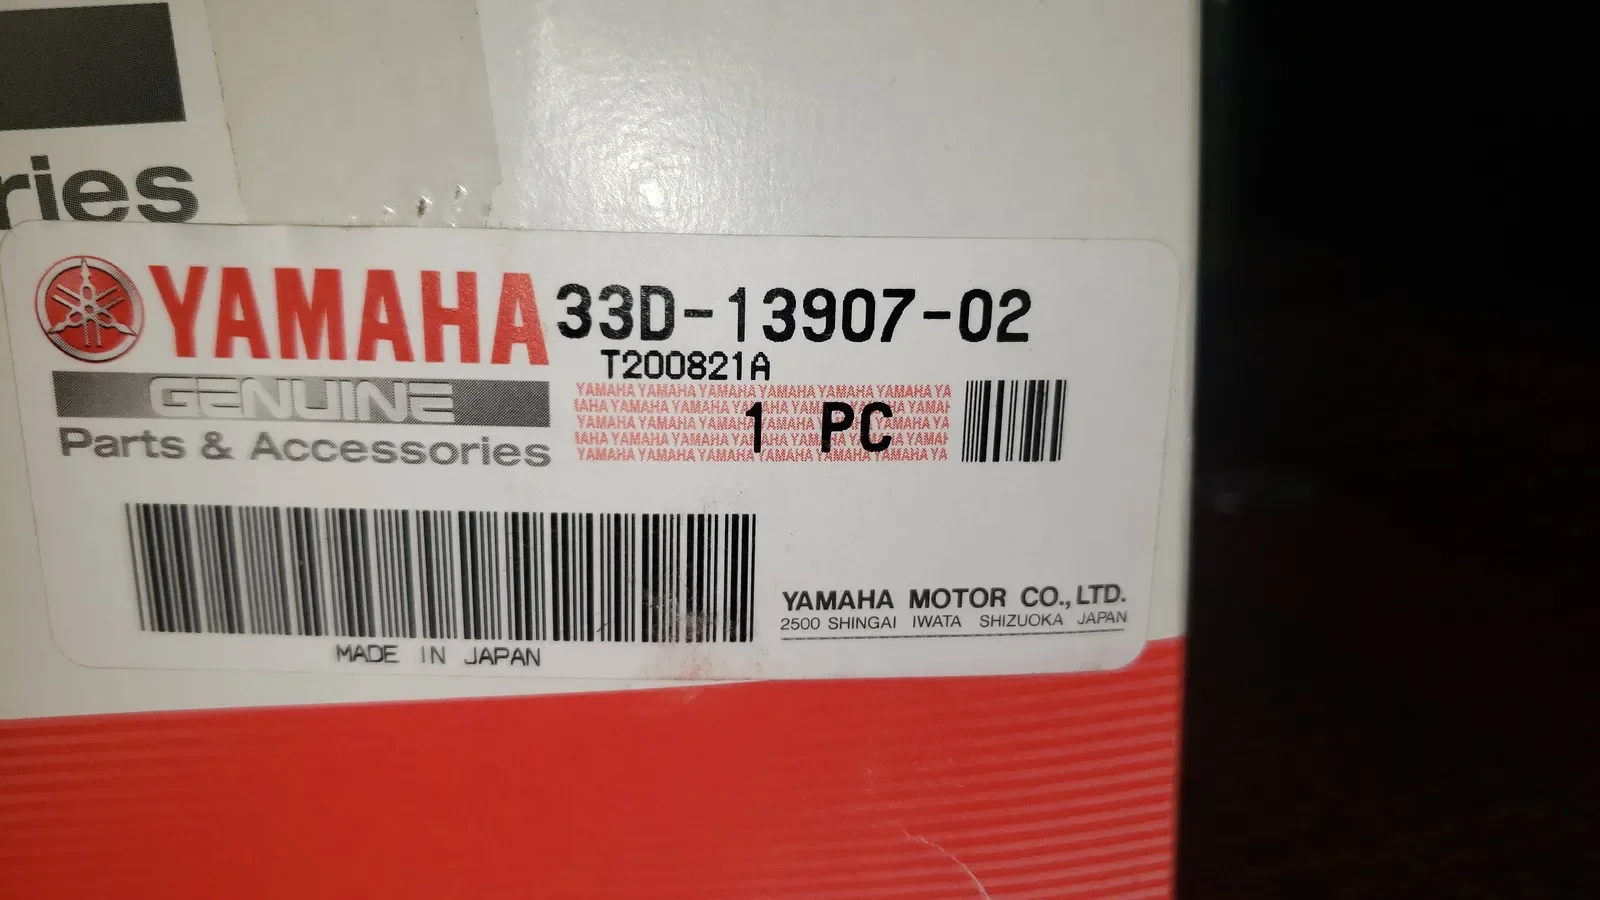 Yamaha FUEL PUMP ASSEMBLY , Part Number 33D-13907-02